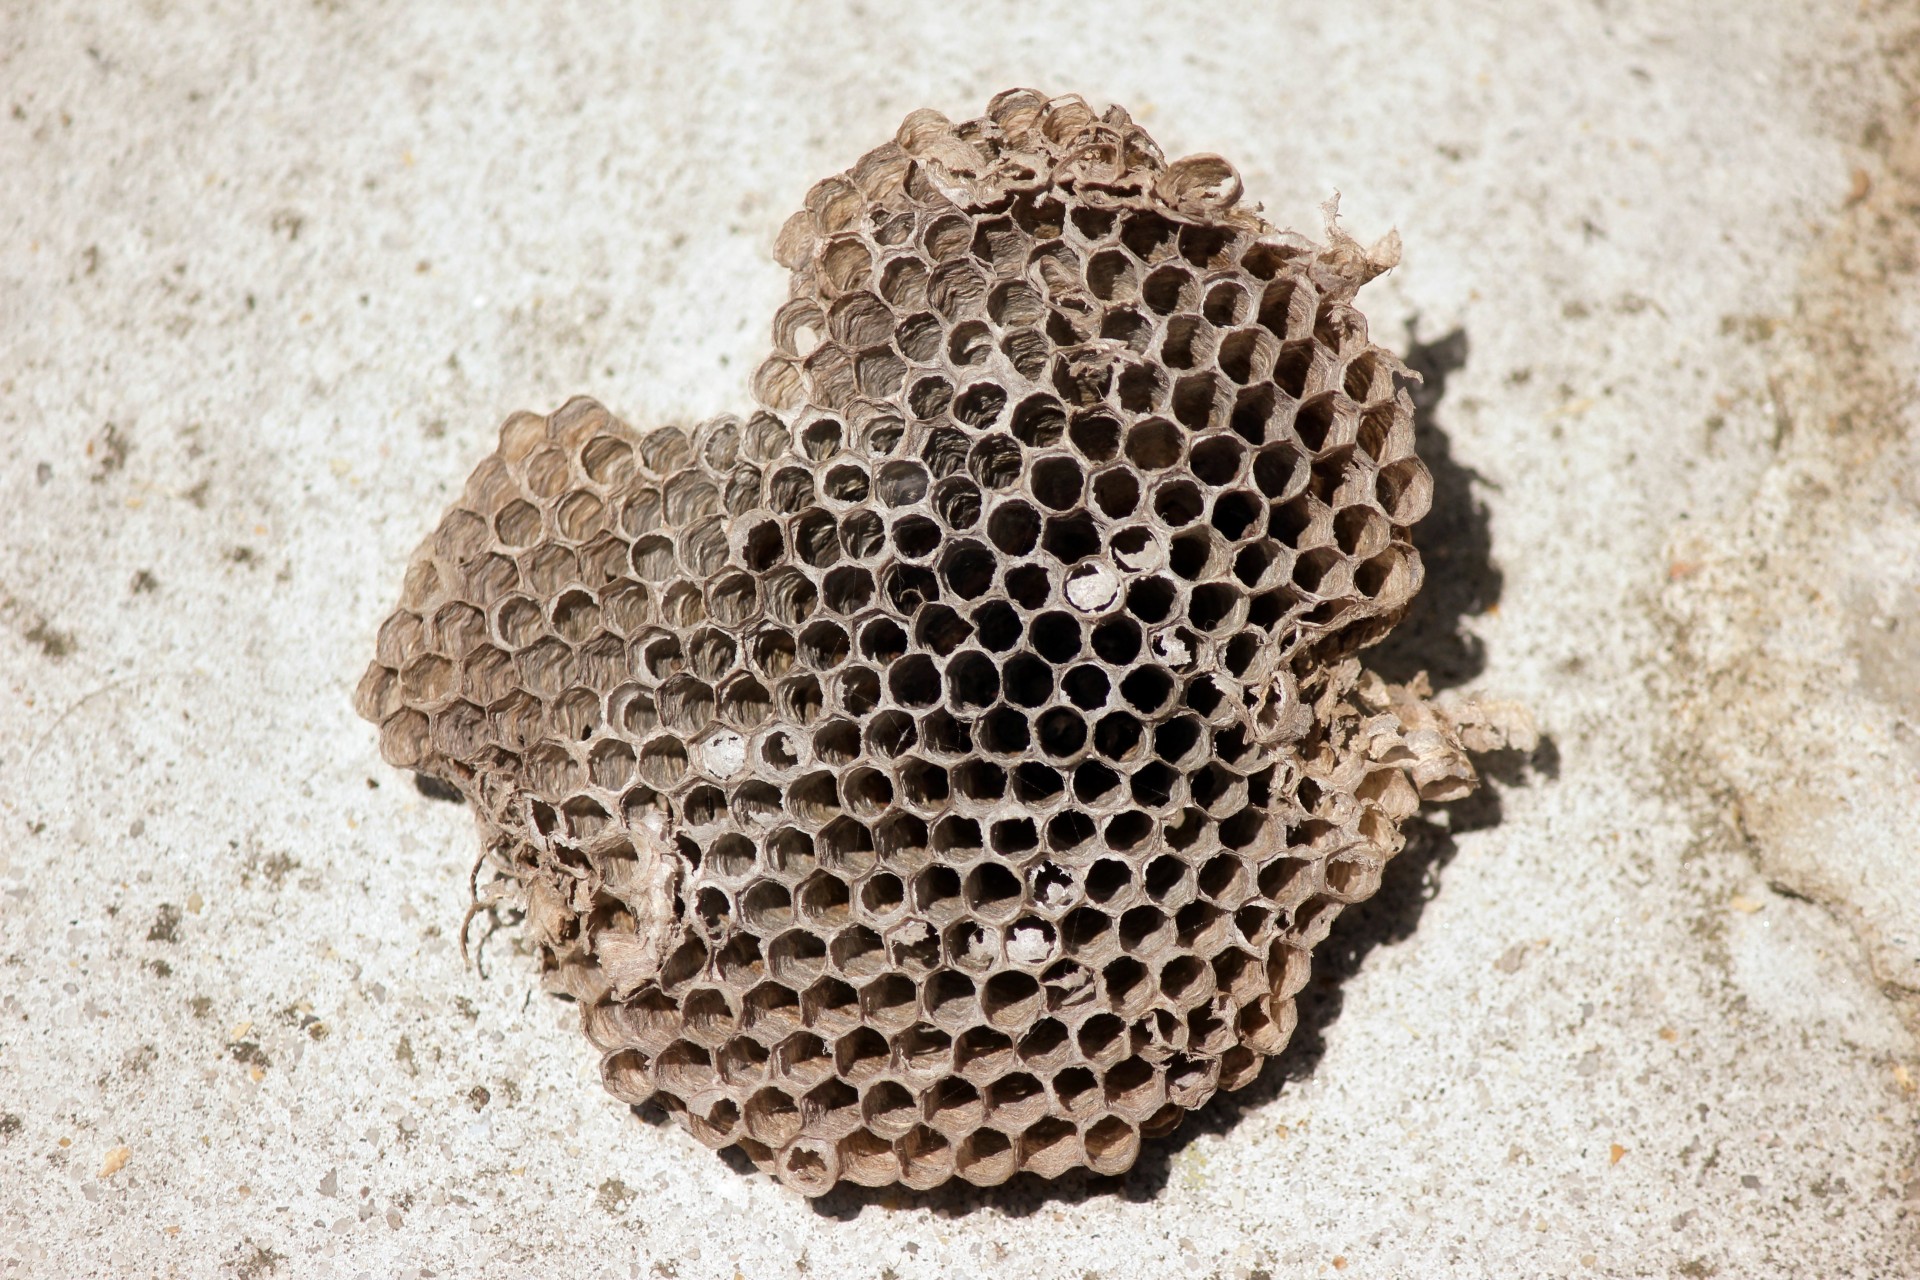 Bee hive,combs,holes,gray,concrete - free image from needpix.com